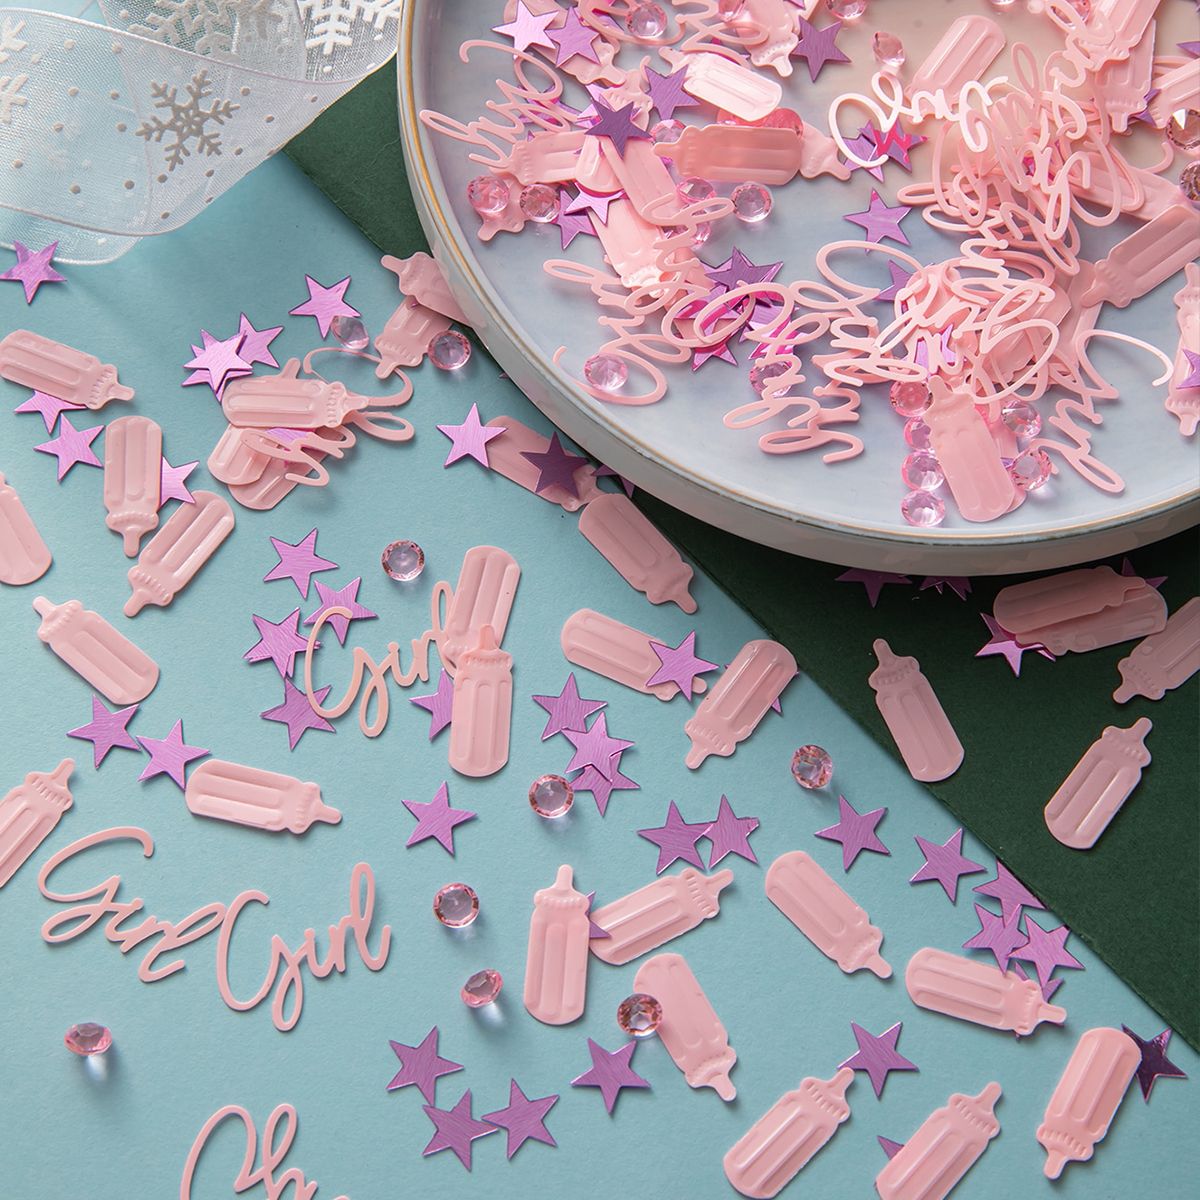 15g Confetti Baby Shower Decoration Letters, Feeding Bottle, Pentagram, Diamond Party Wedding Tabletop Paper Scraps